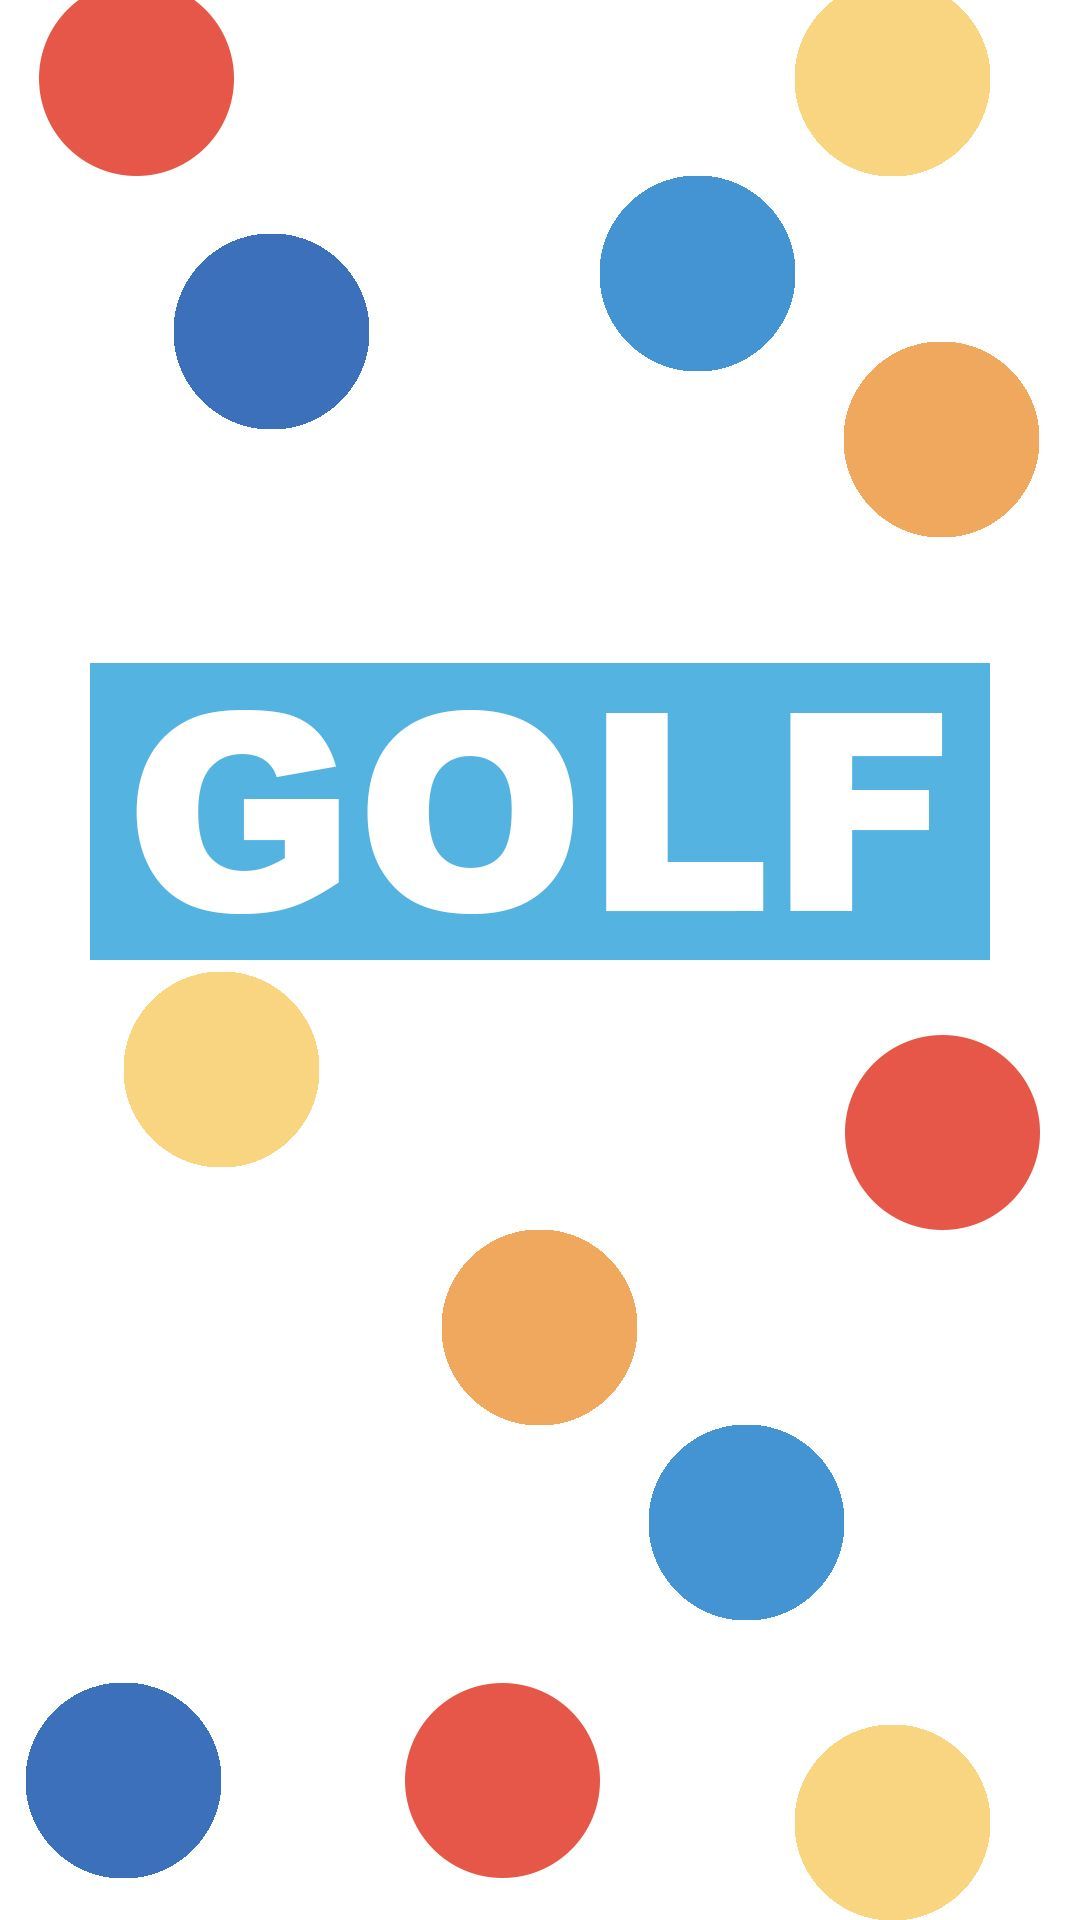 Golf Wang Iphone Wallpapers